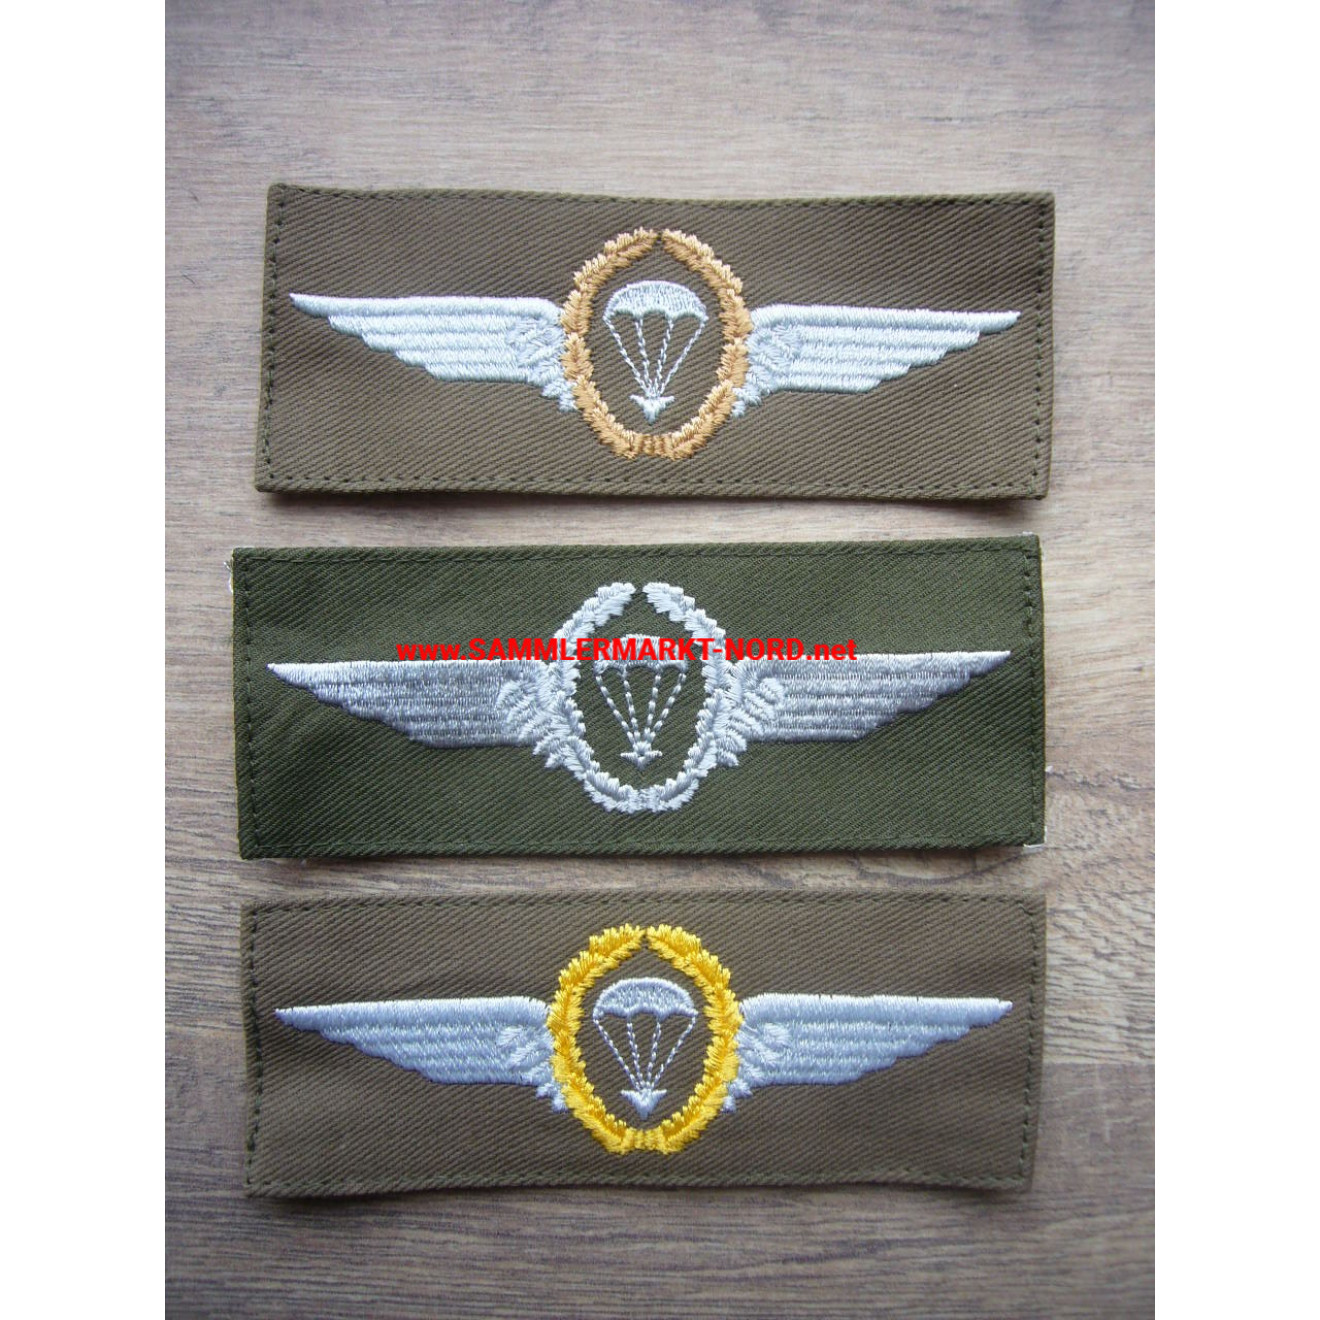 Bundeswehr - Parachutist badge - bronze, silver and gold - cloth versions